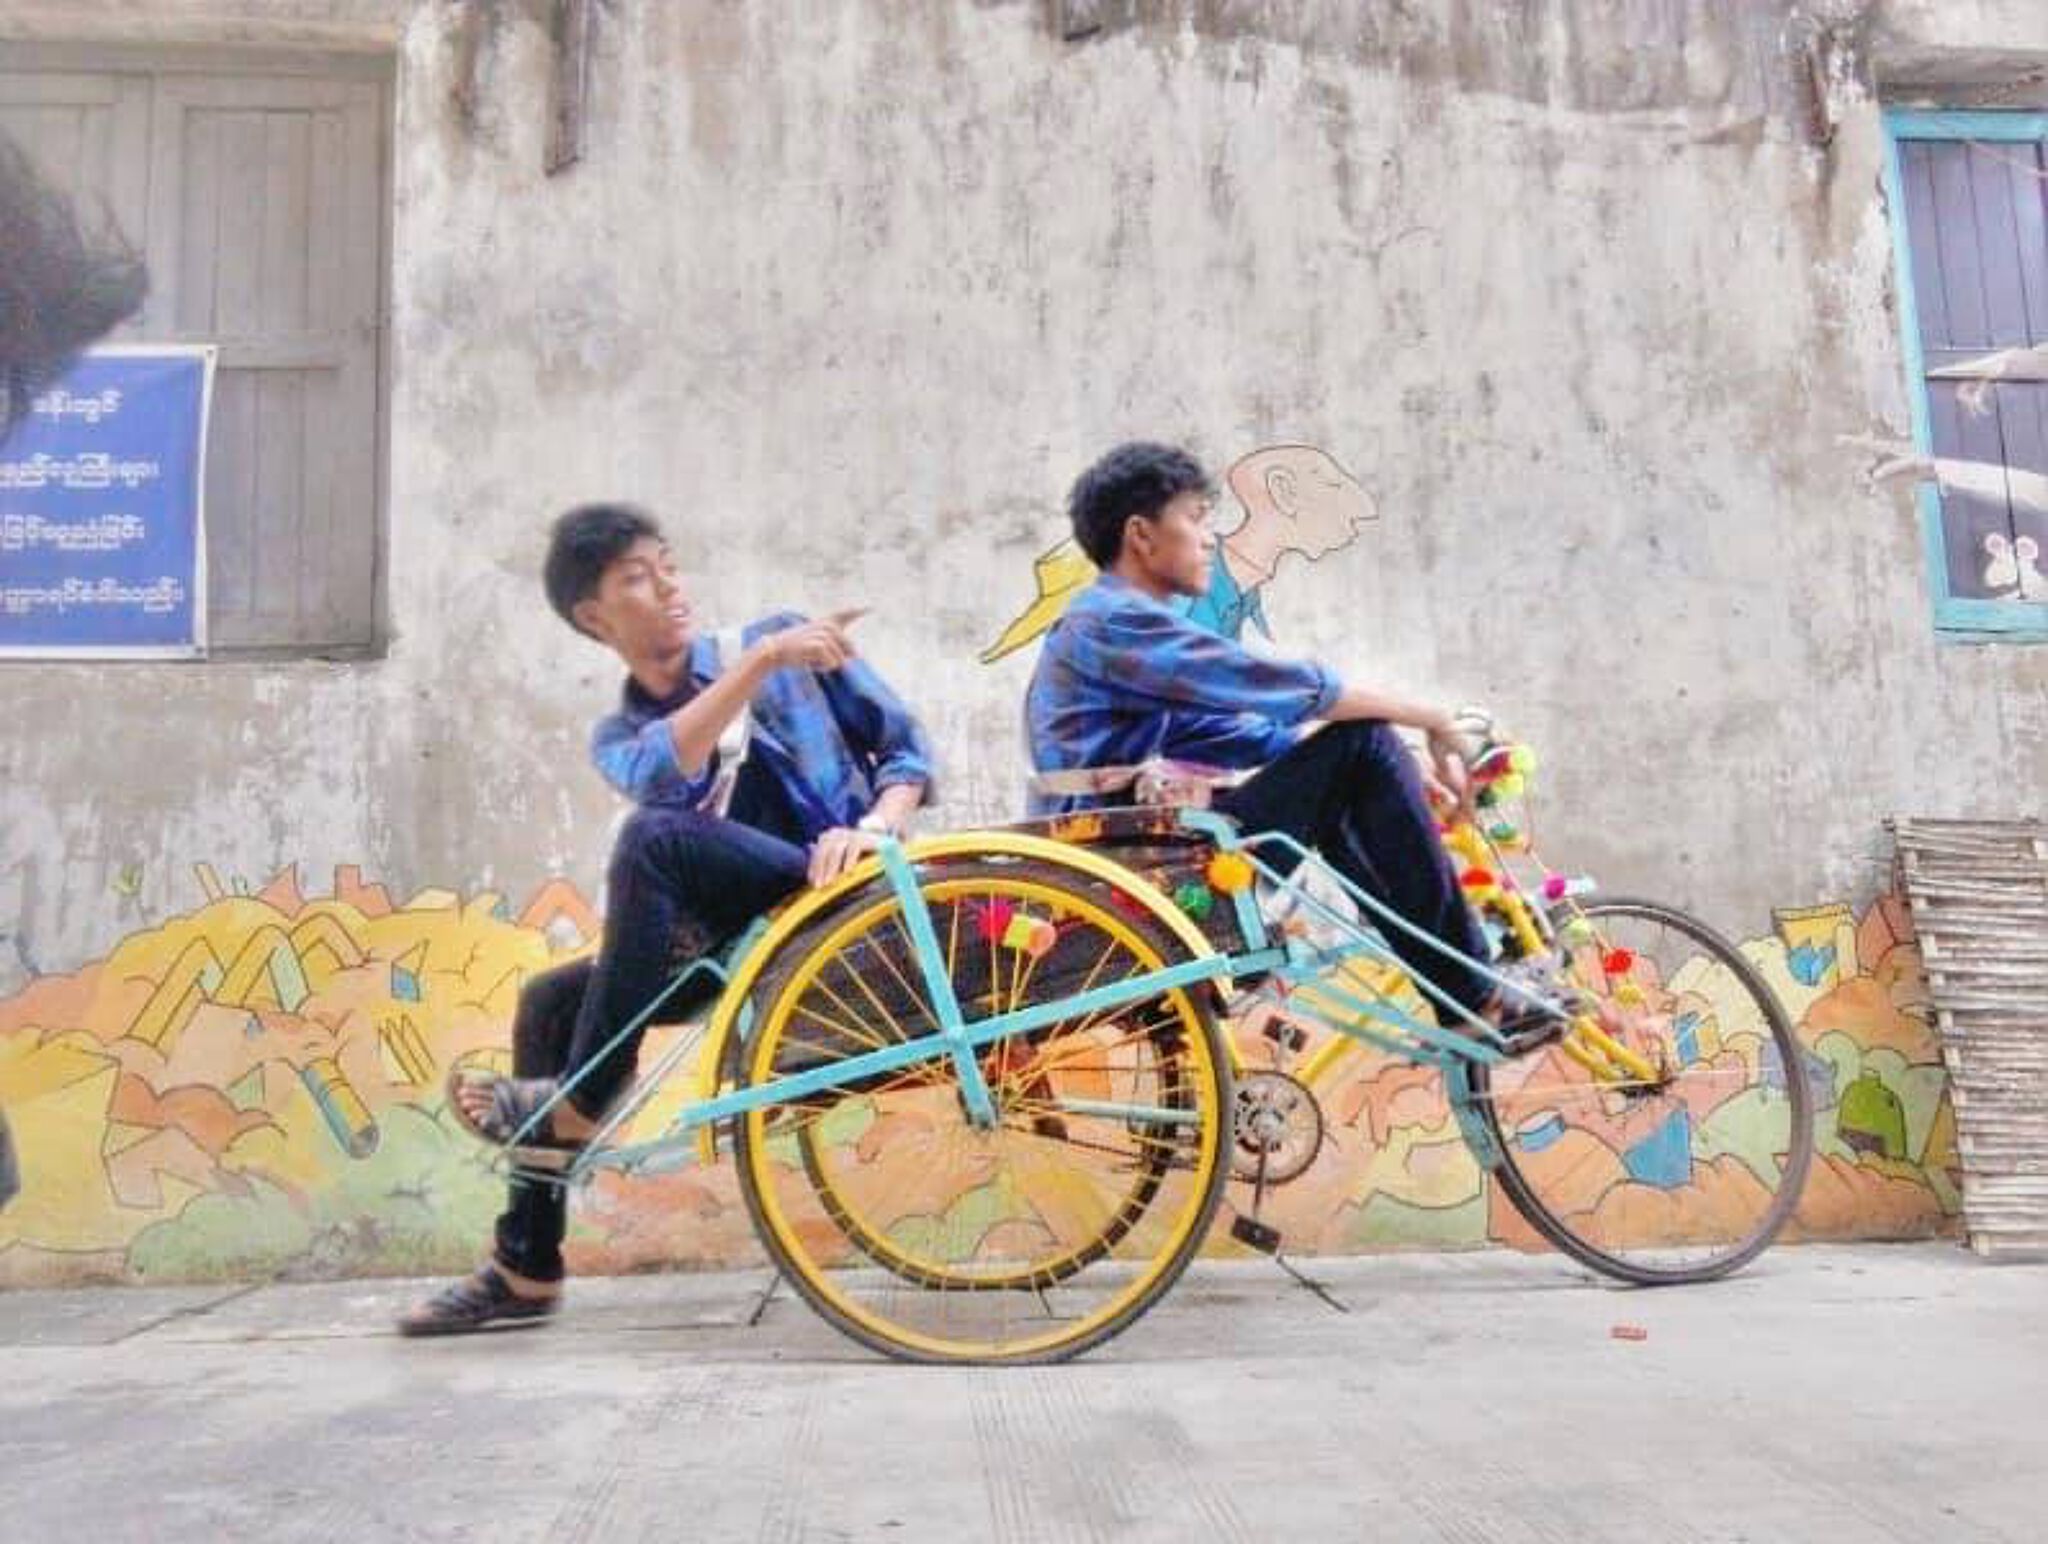 alexandre bertrand&mdash;Htun Htun on his rickshaw